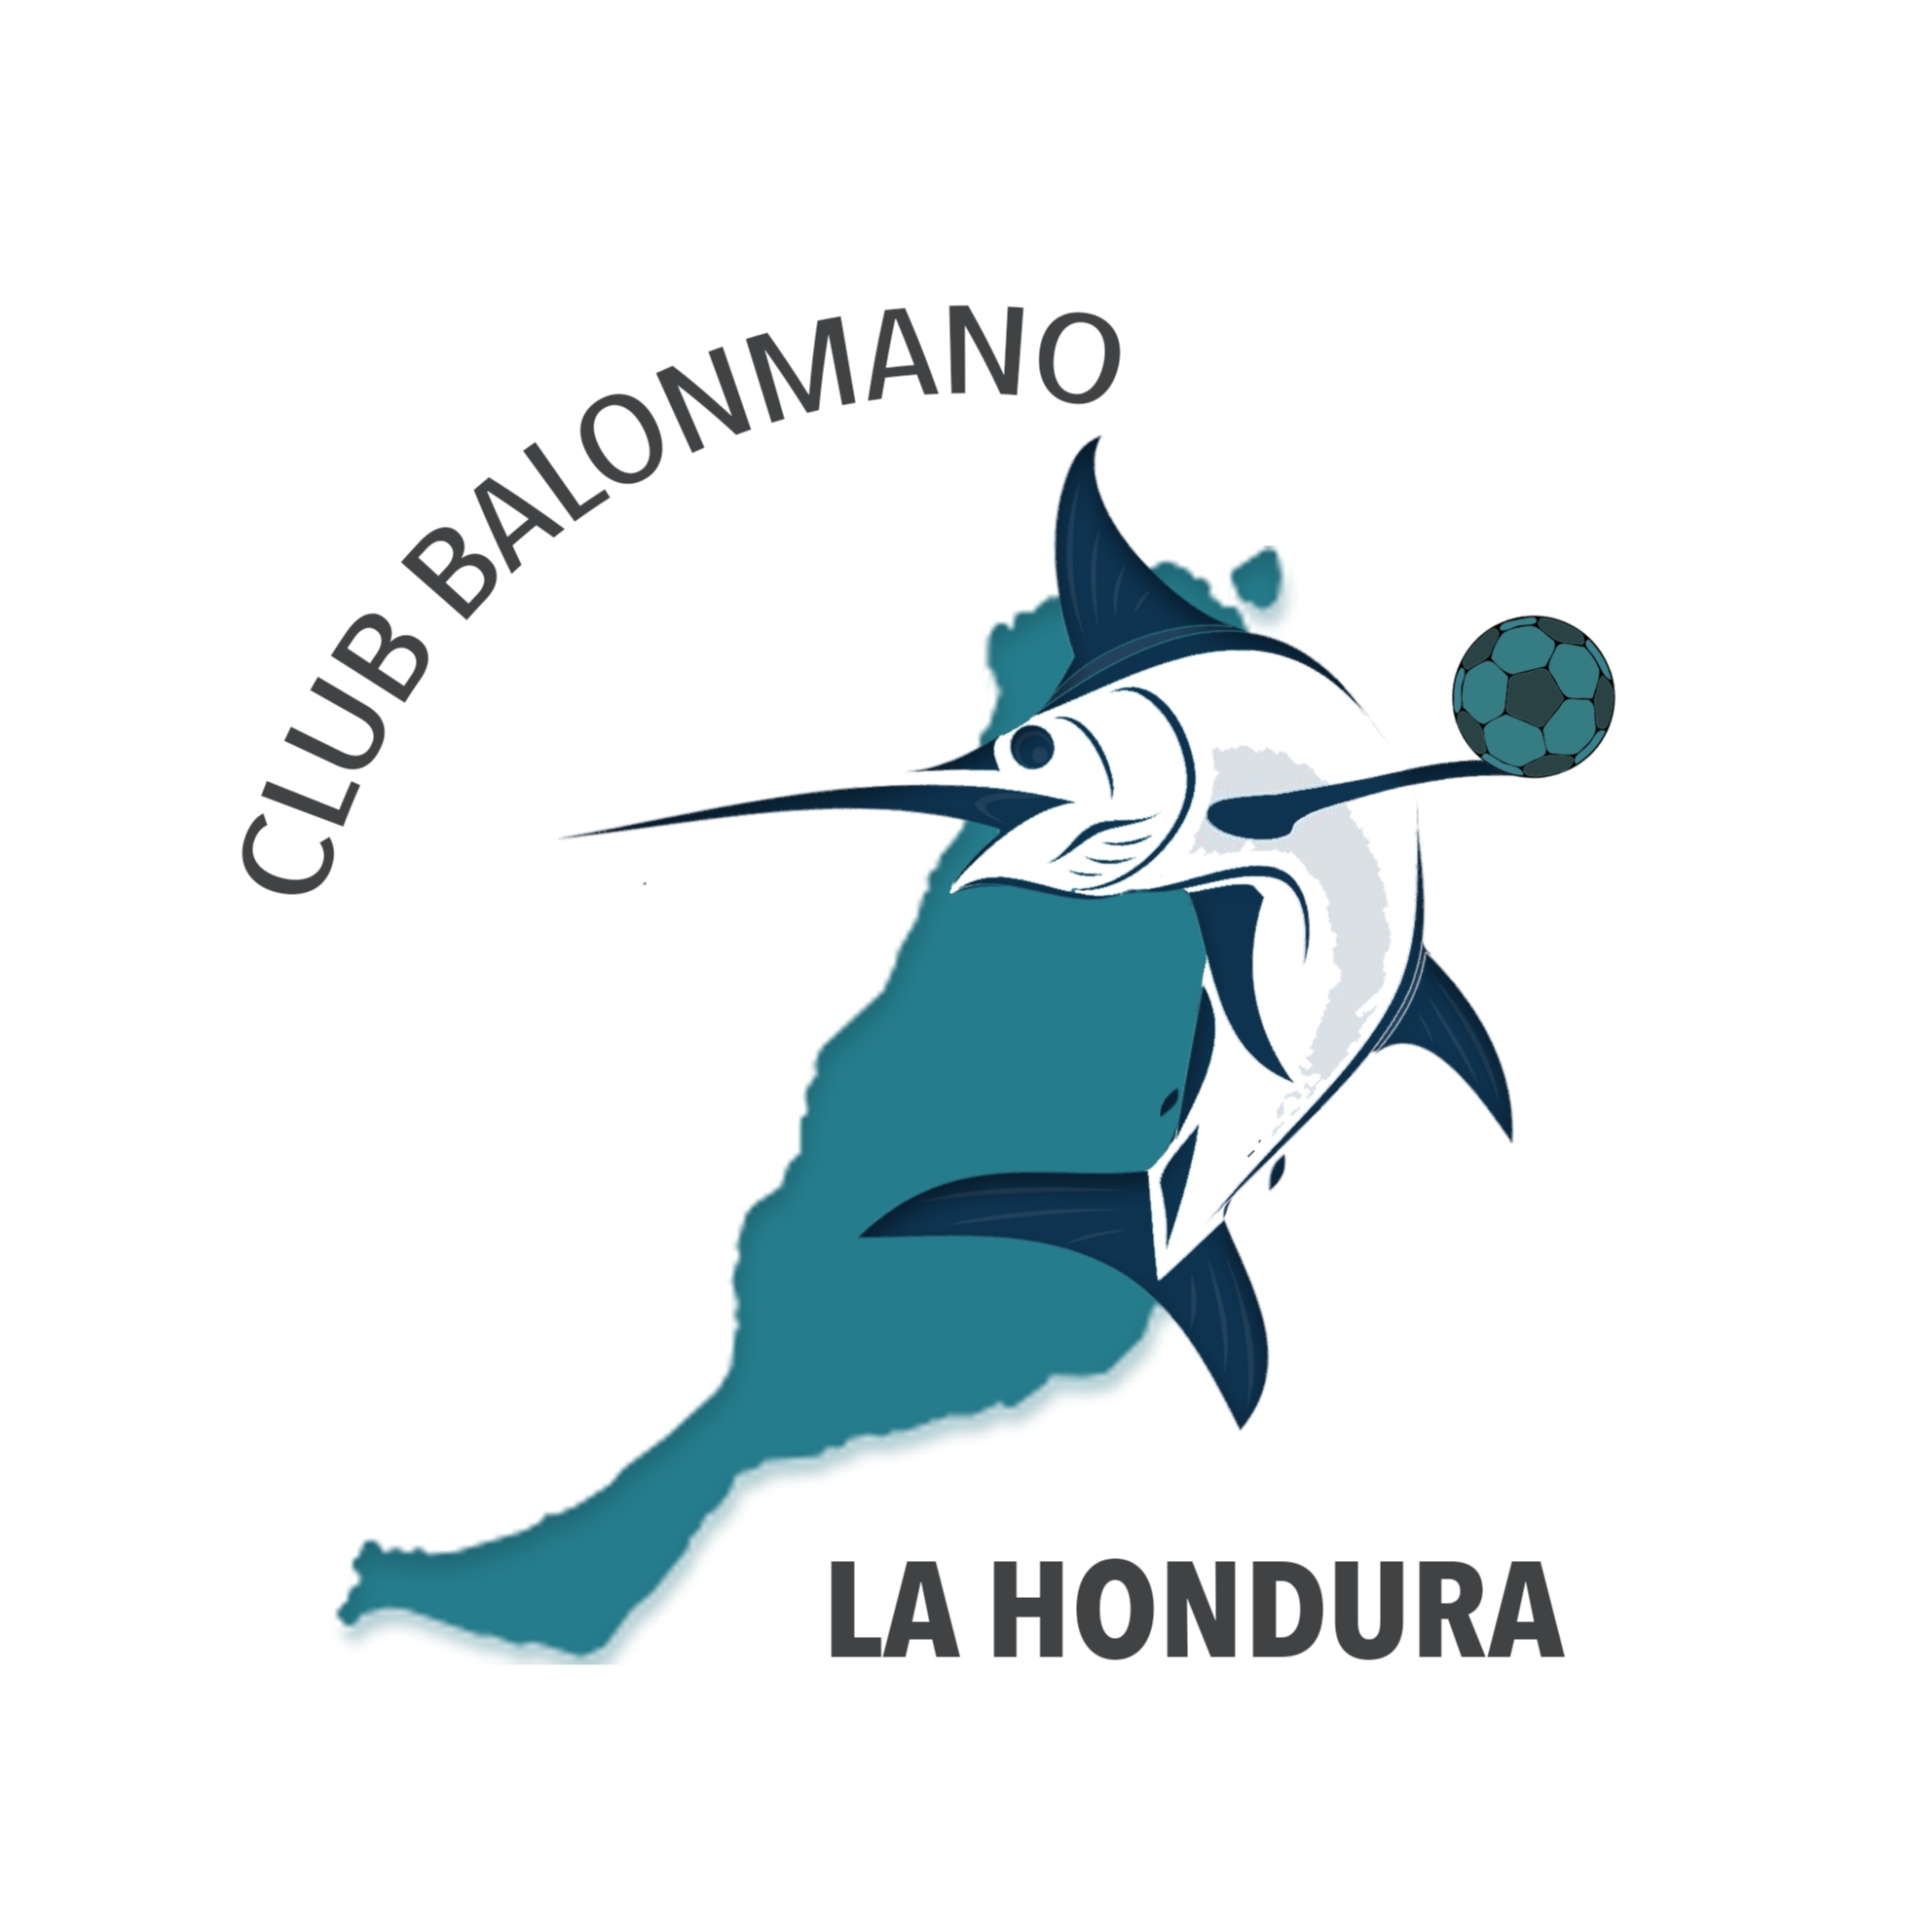 CLUB BALONMANO LA HONDURA